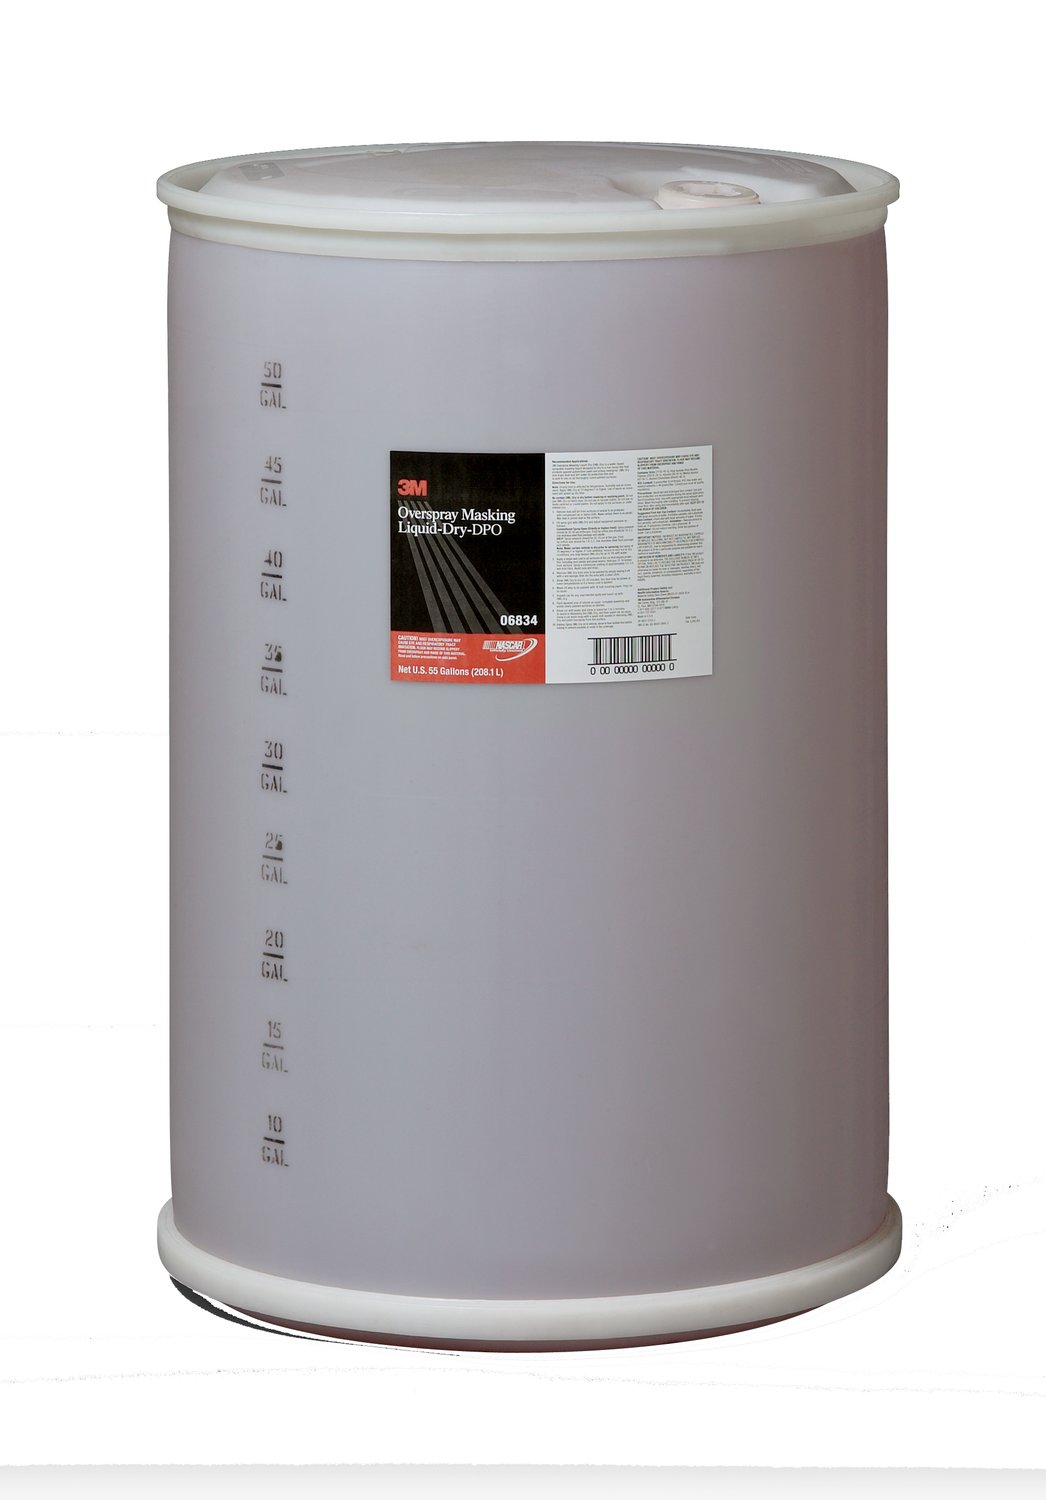 7100136758 - 3M Overspray Masking Liquid Dry, 06834, 55 gallon, 1 per case